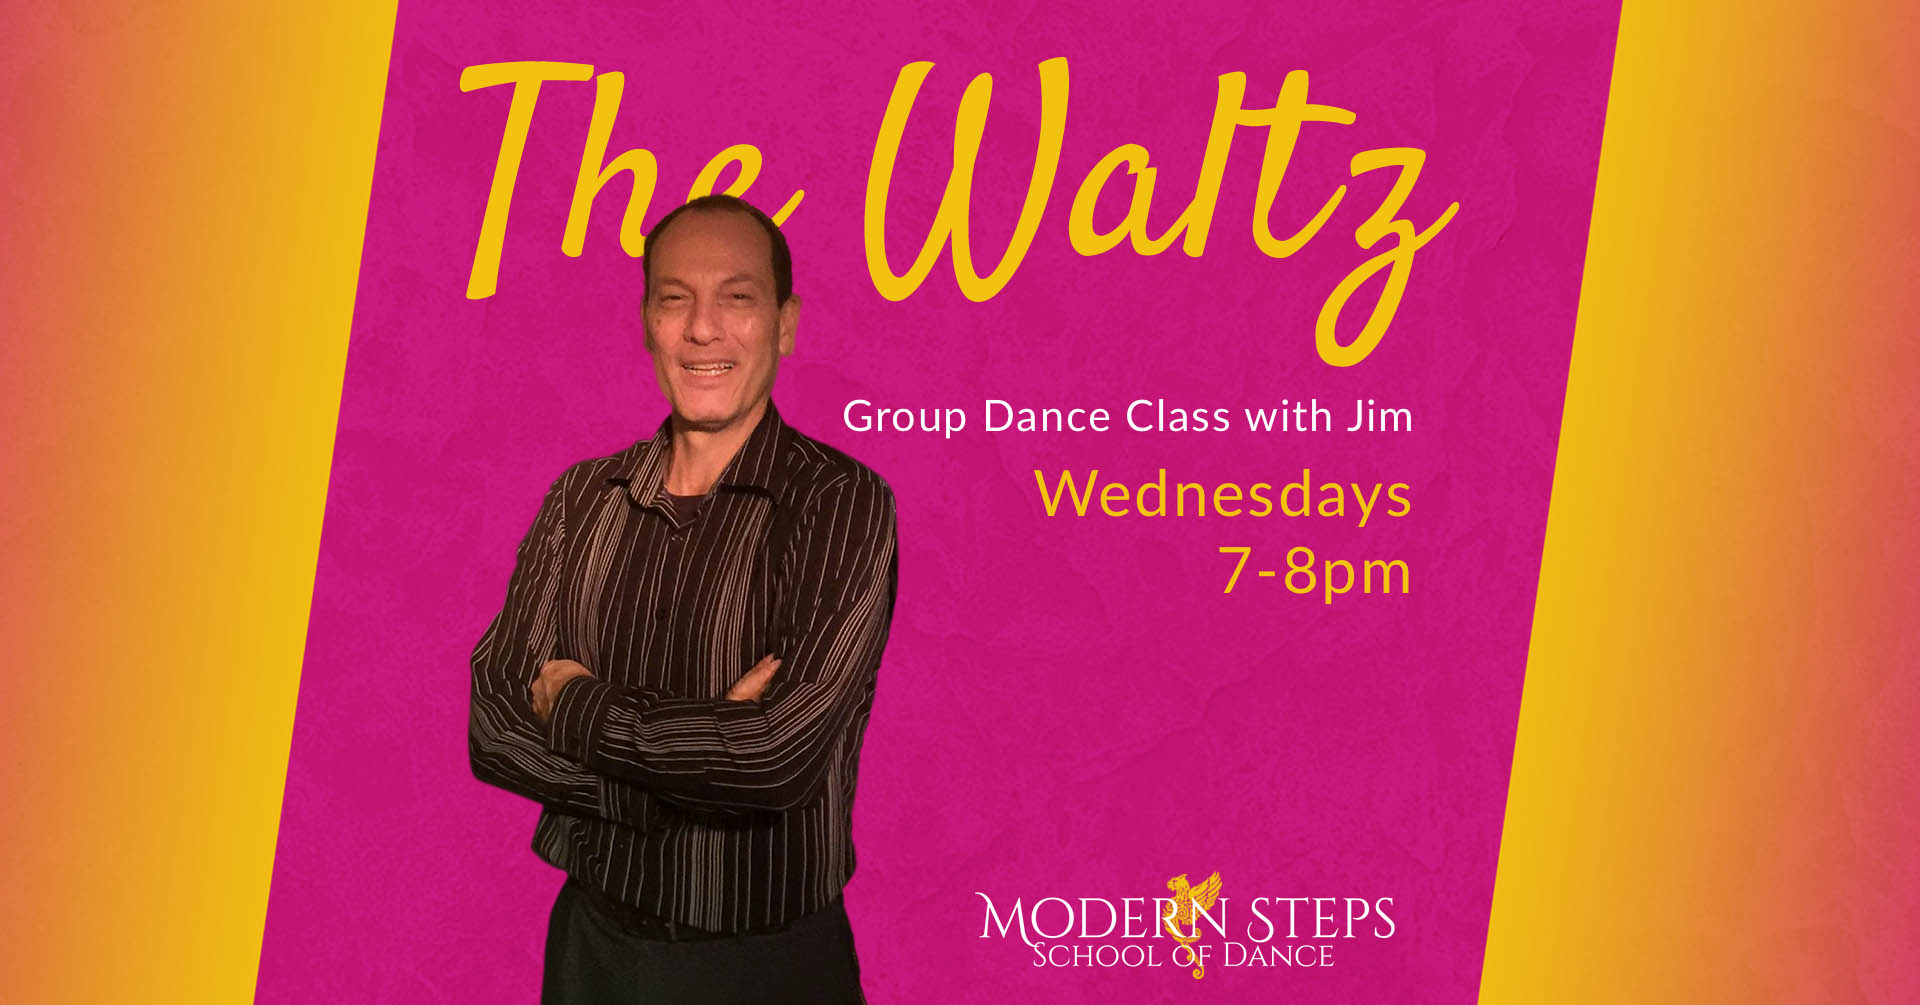 Naples Ballroom Dance Lessons - The Waltz - Modern Steps School of Dance - Naples Florida - Naples Florida Things to Do